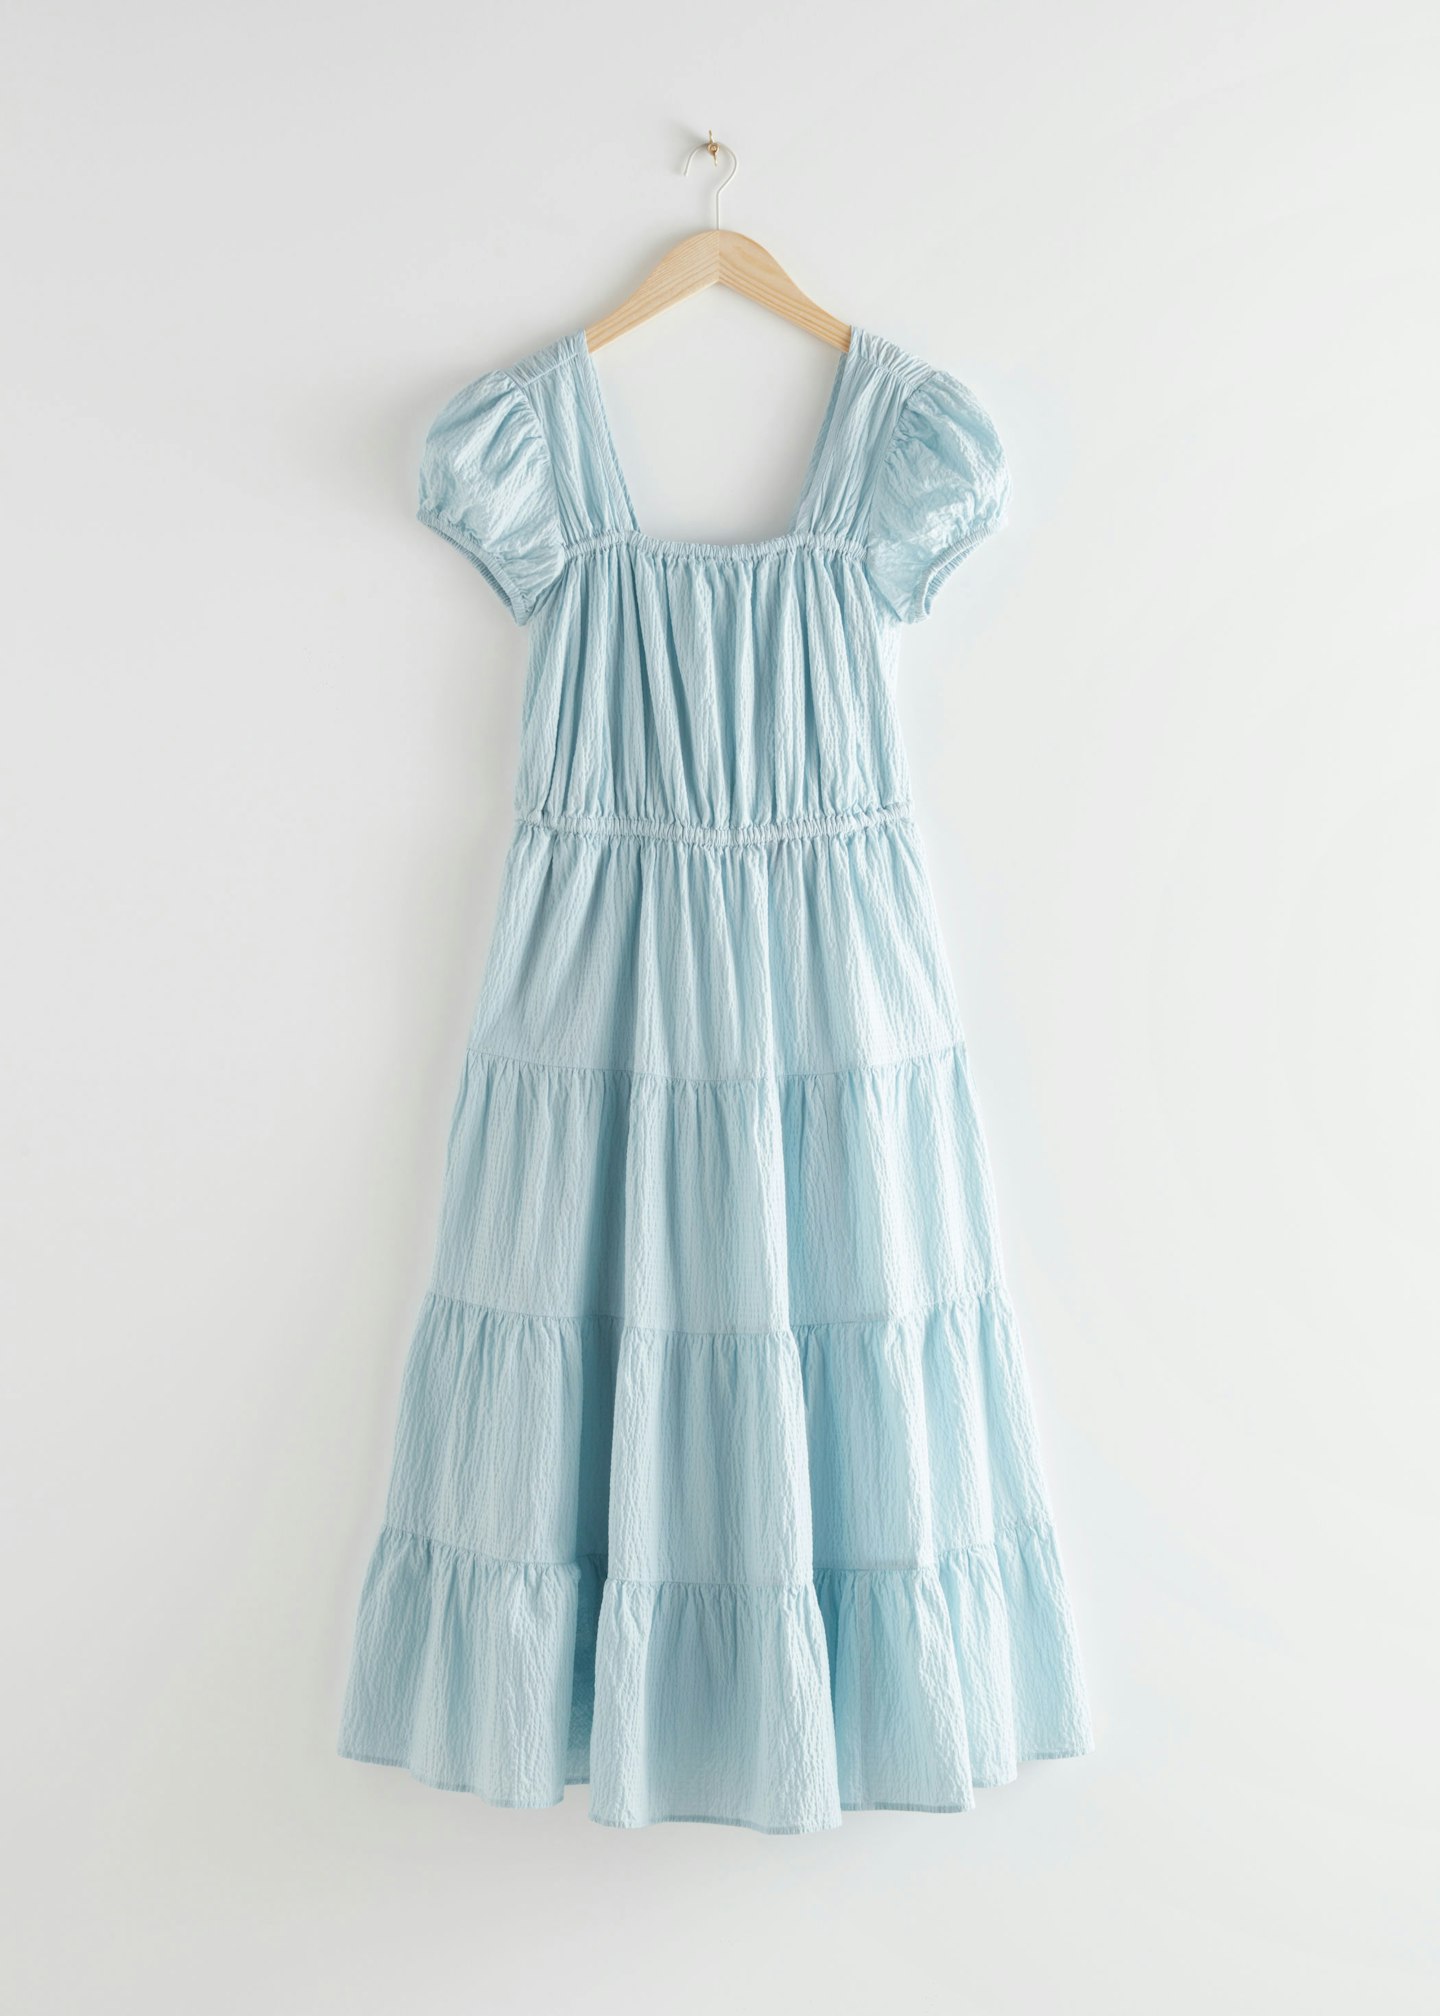 & Other Stories, Voluminous Midi Dress, £135